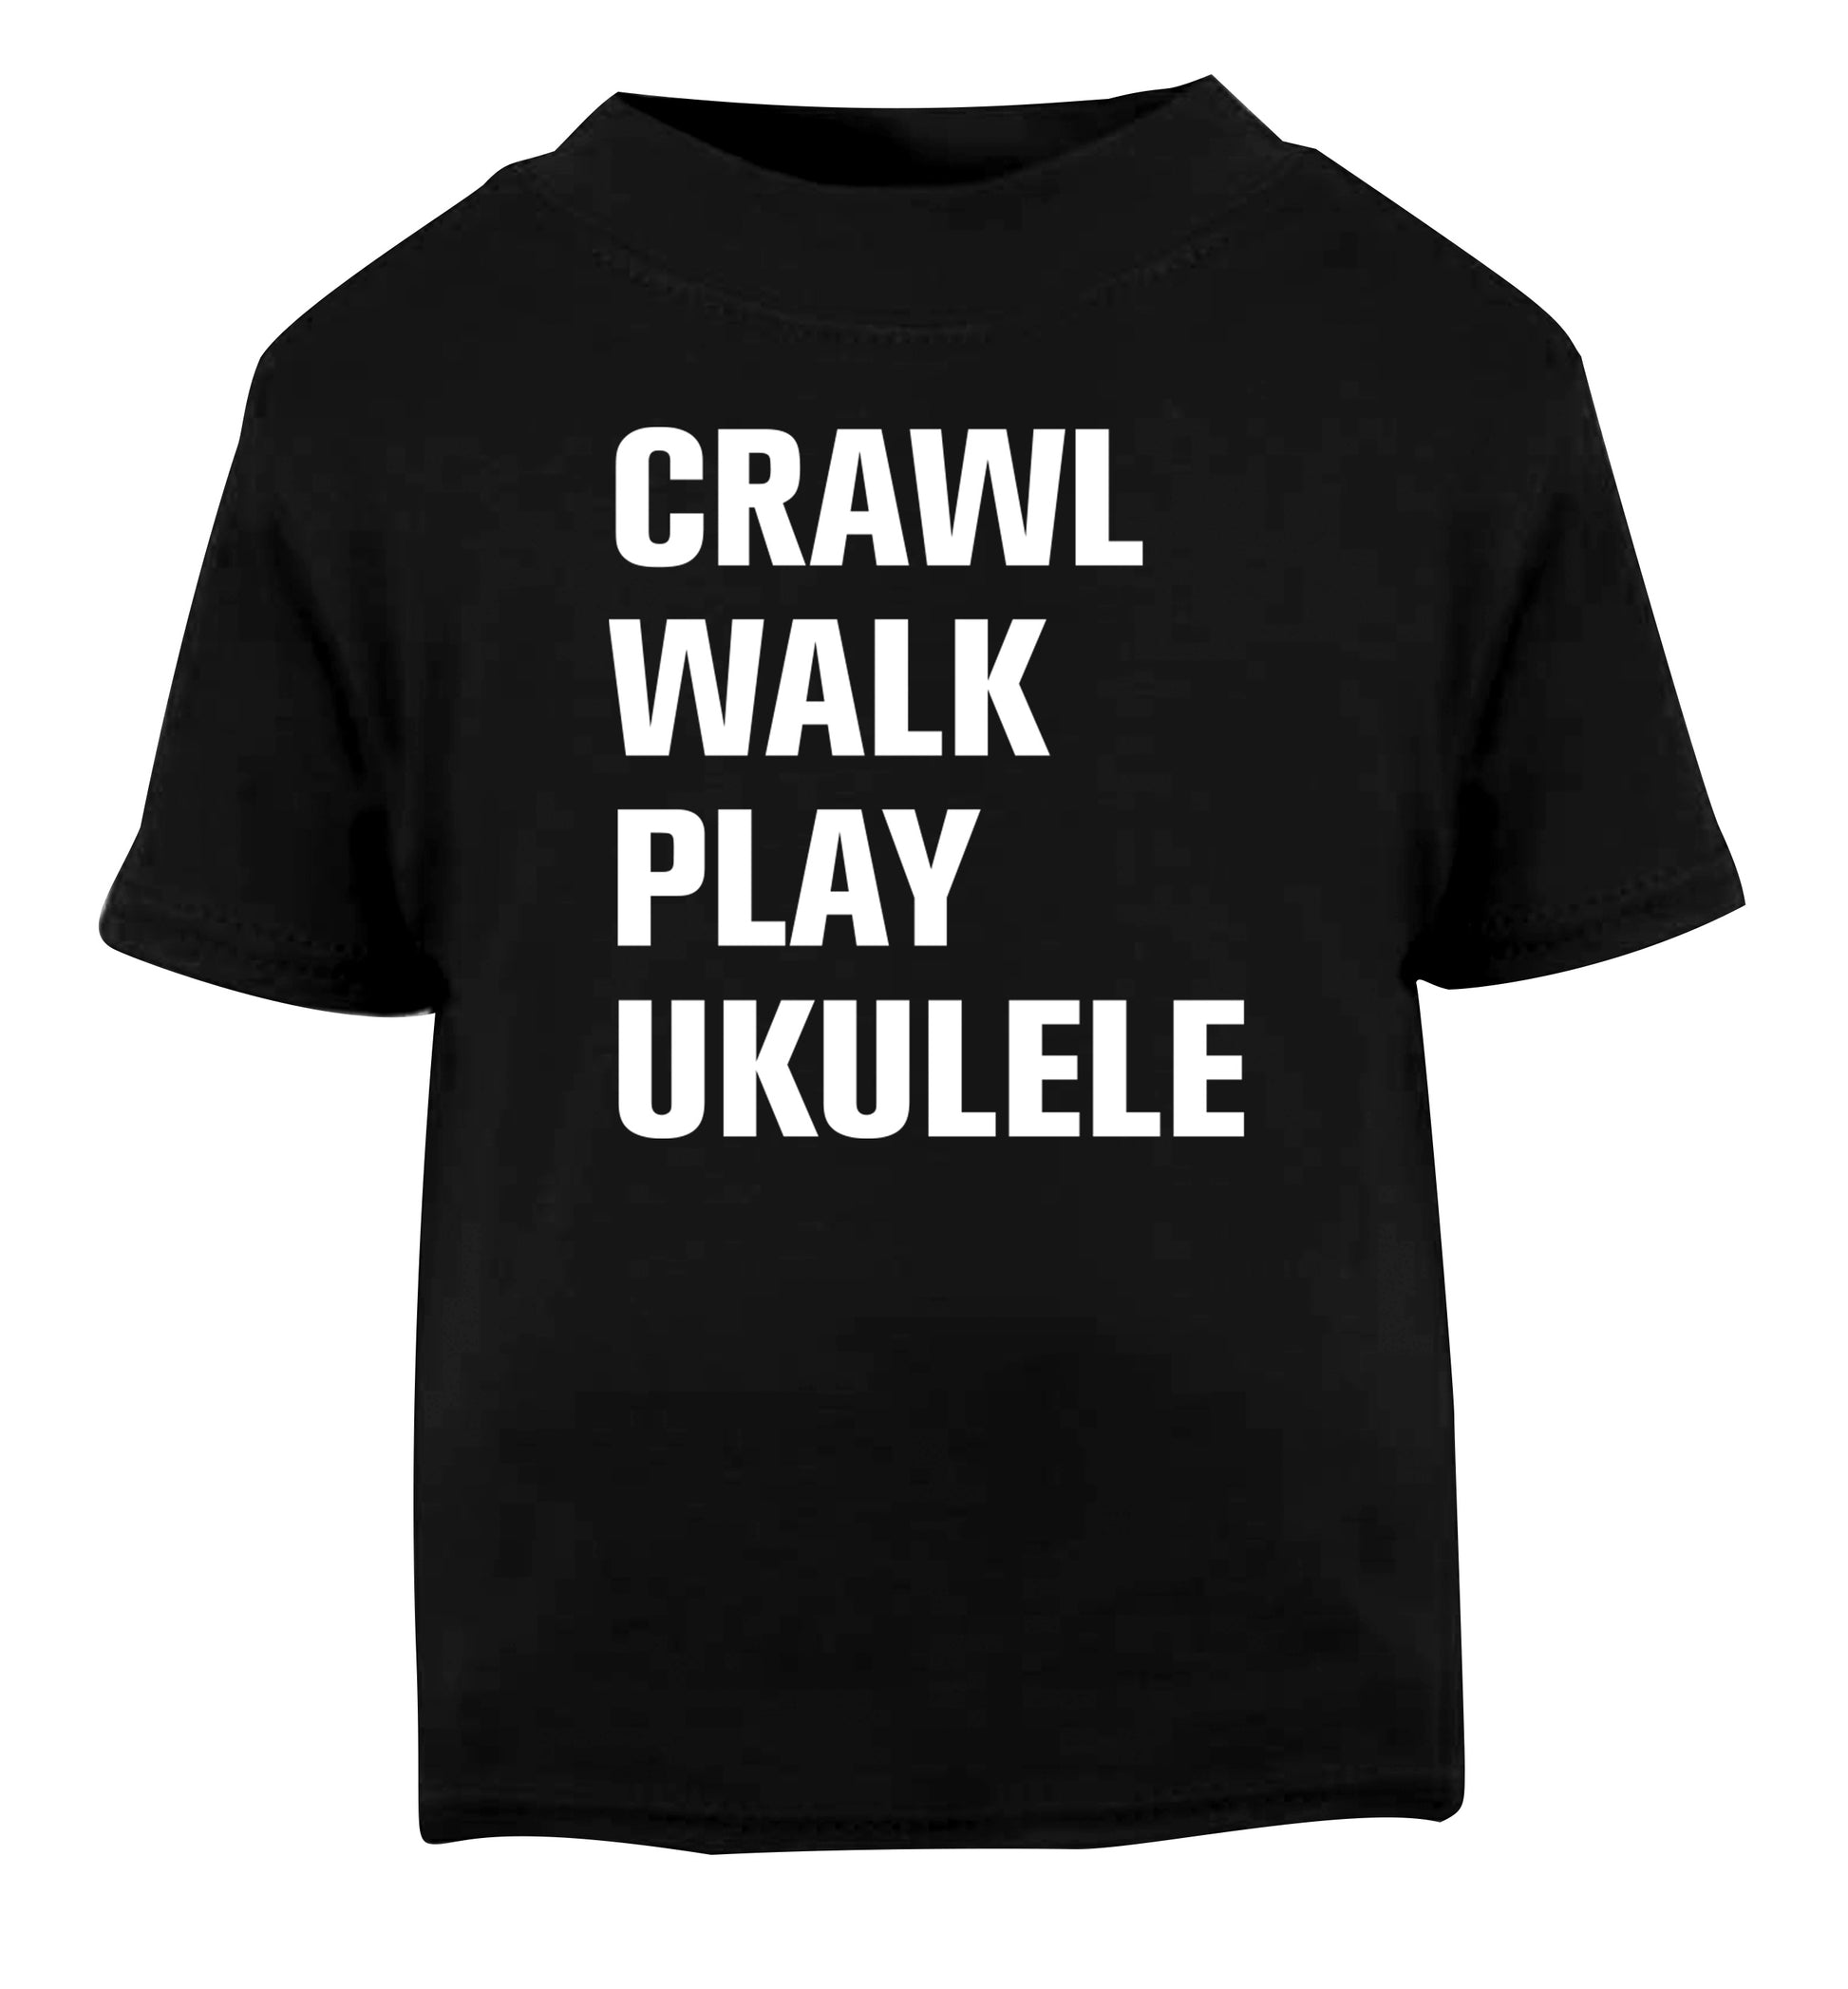 Crawl walk play ukulele Black Baby Toddler Tshirt 2 years